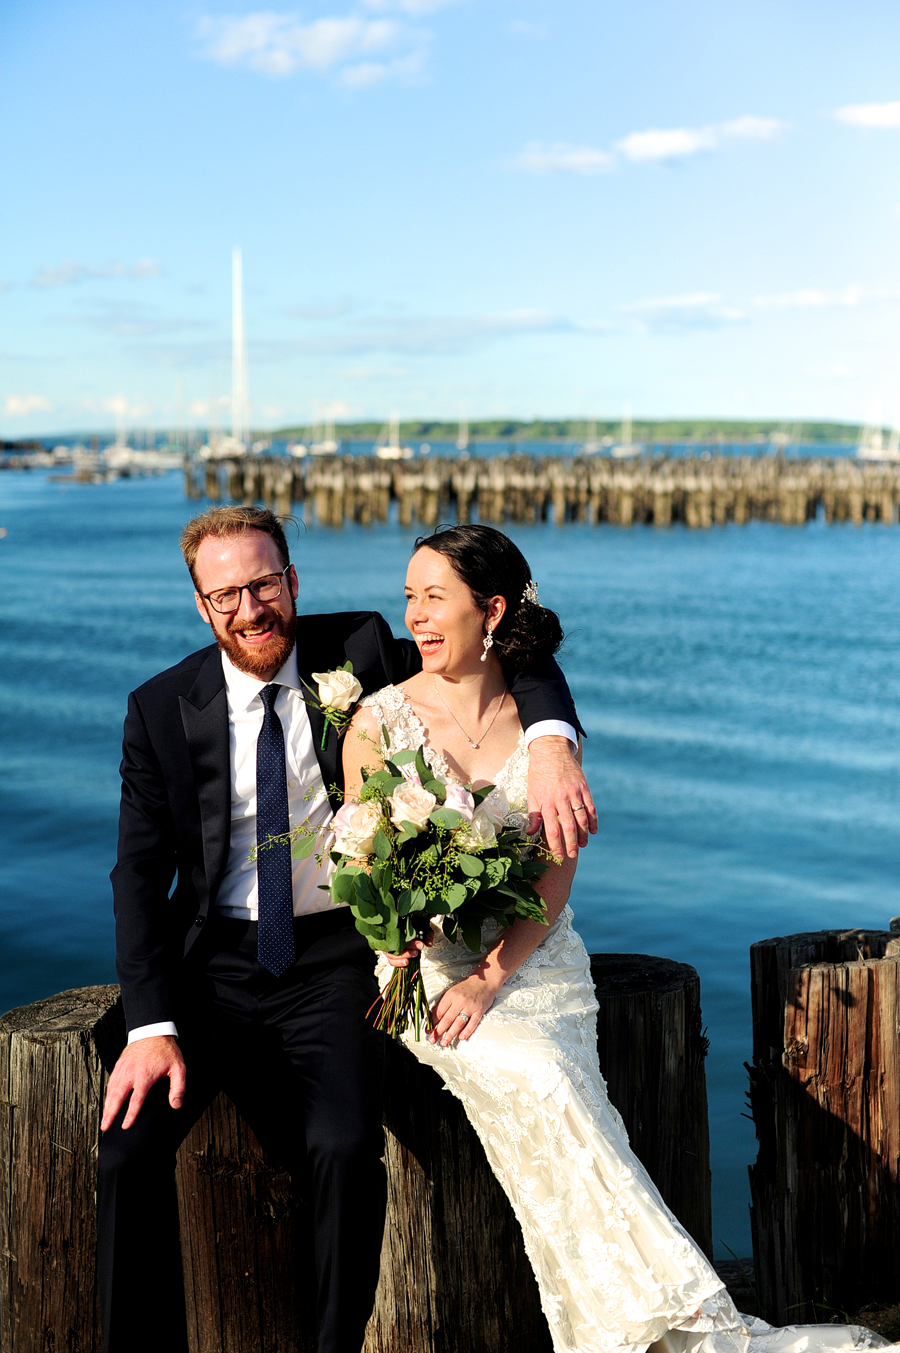 wedding by the ocean in portland, maine